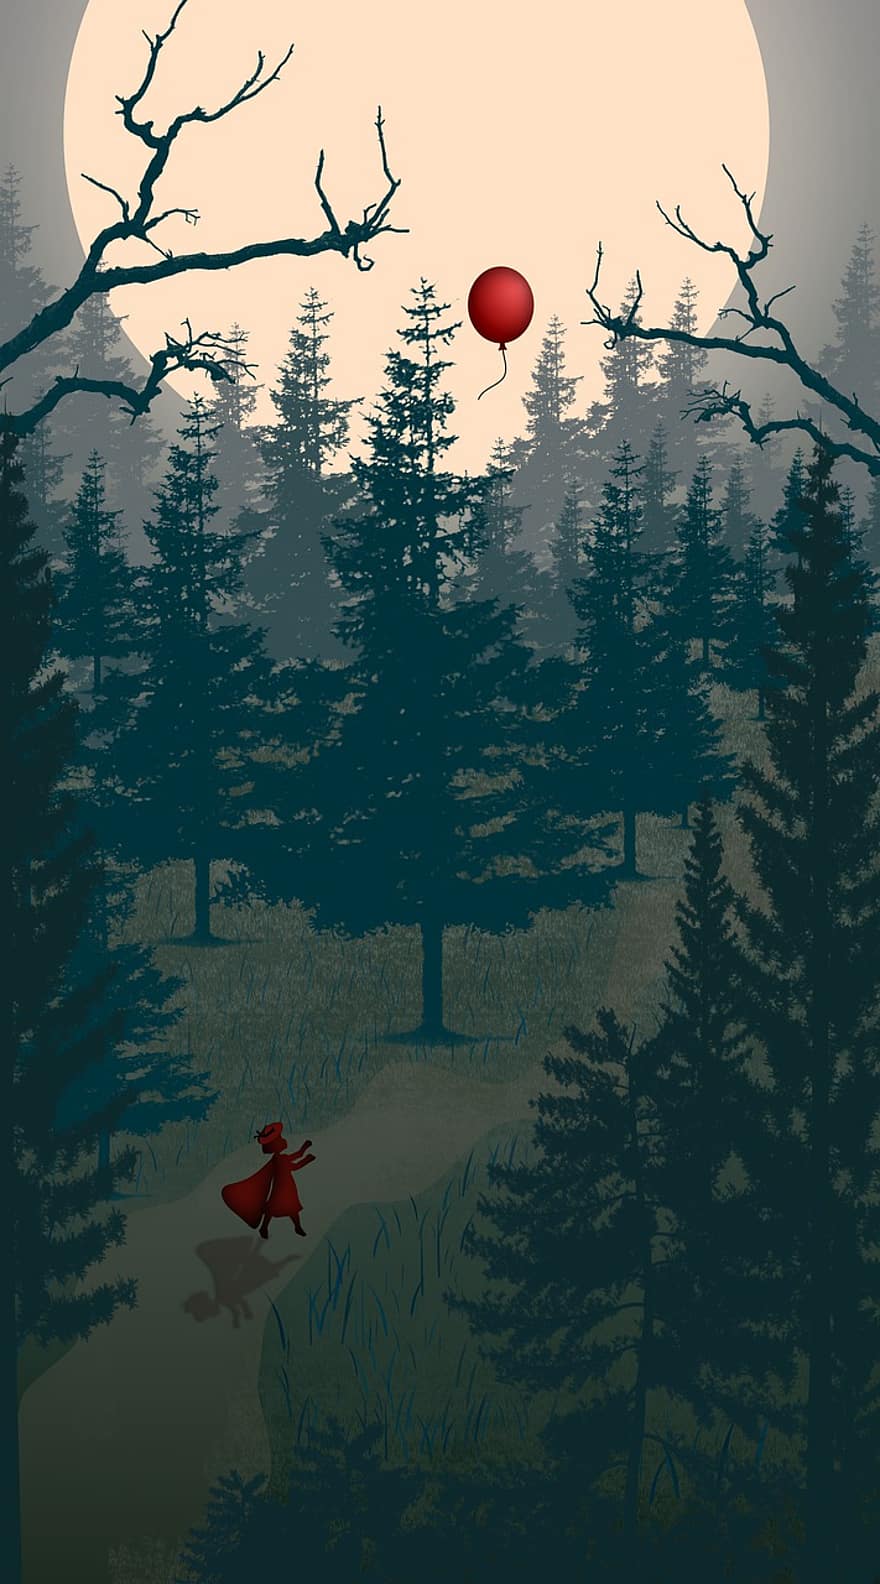 lille Rødhætte, mørk skov, fantasi, måne, træer, rød ballon, natur, faret vild, alene, nat, tegneserie